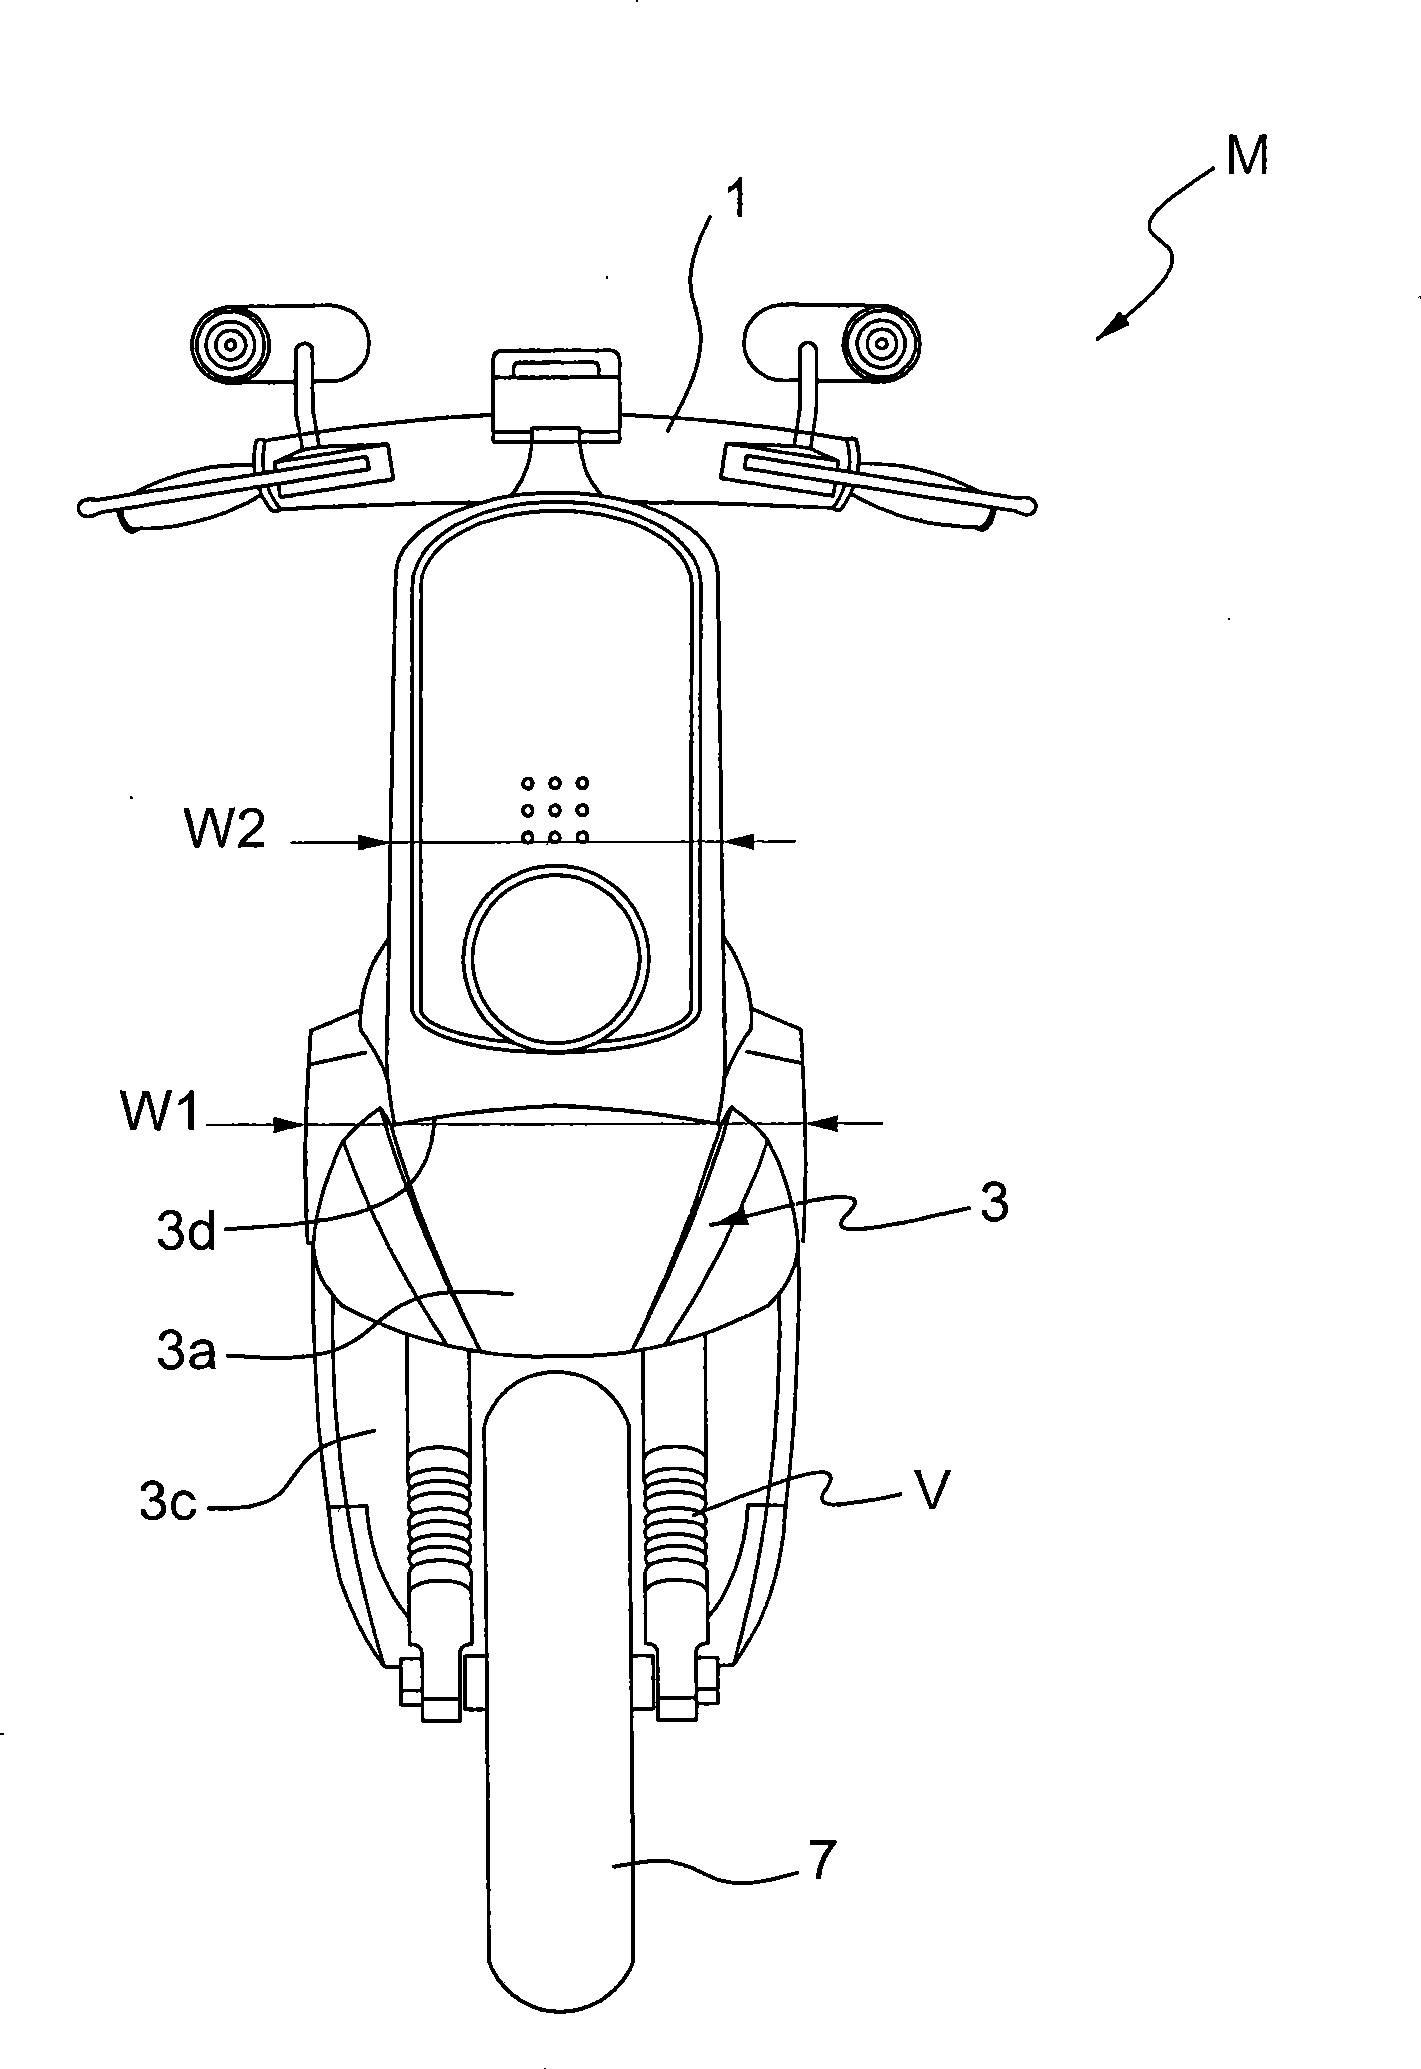 Motor cycle